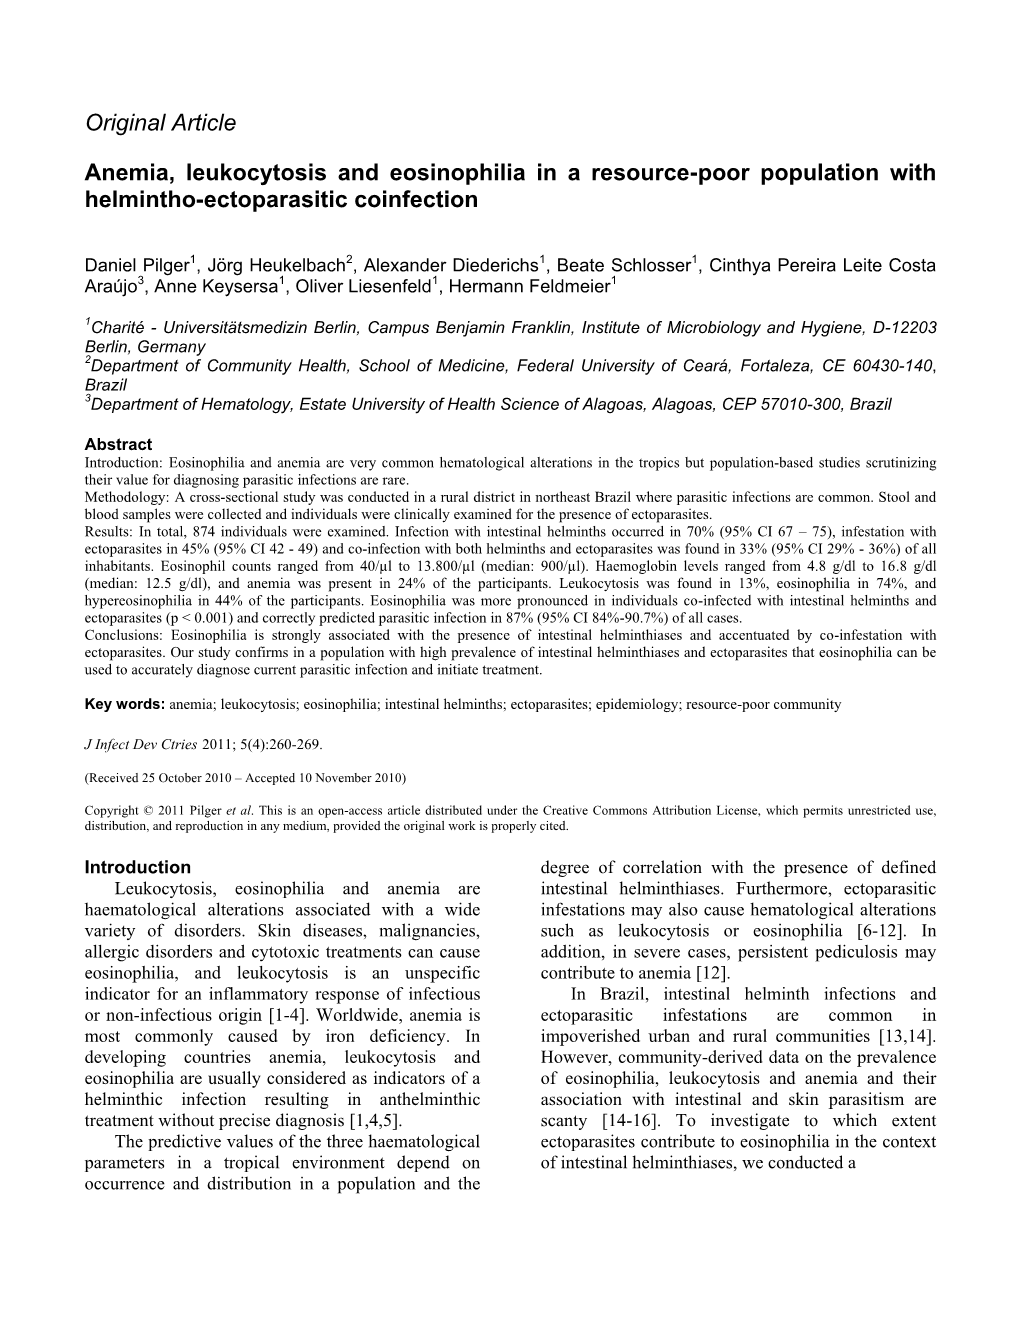 Original Article Anemia, Leukocytosis and Eosinophilia in a Resource-Poor